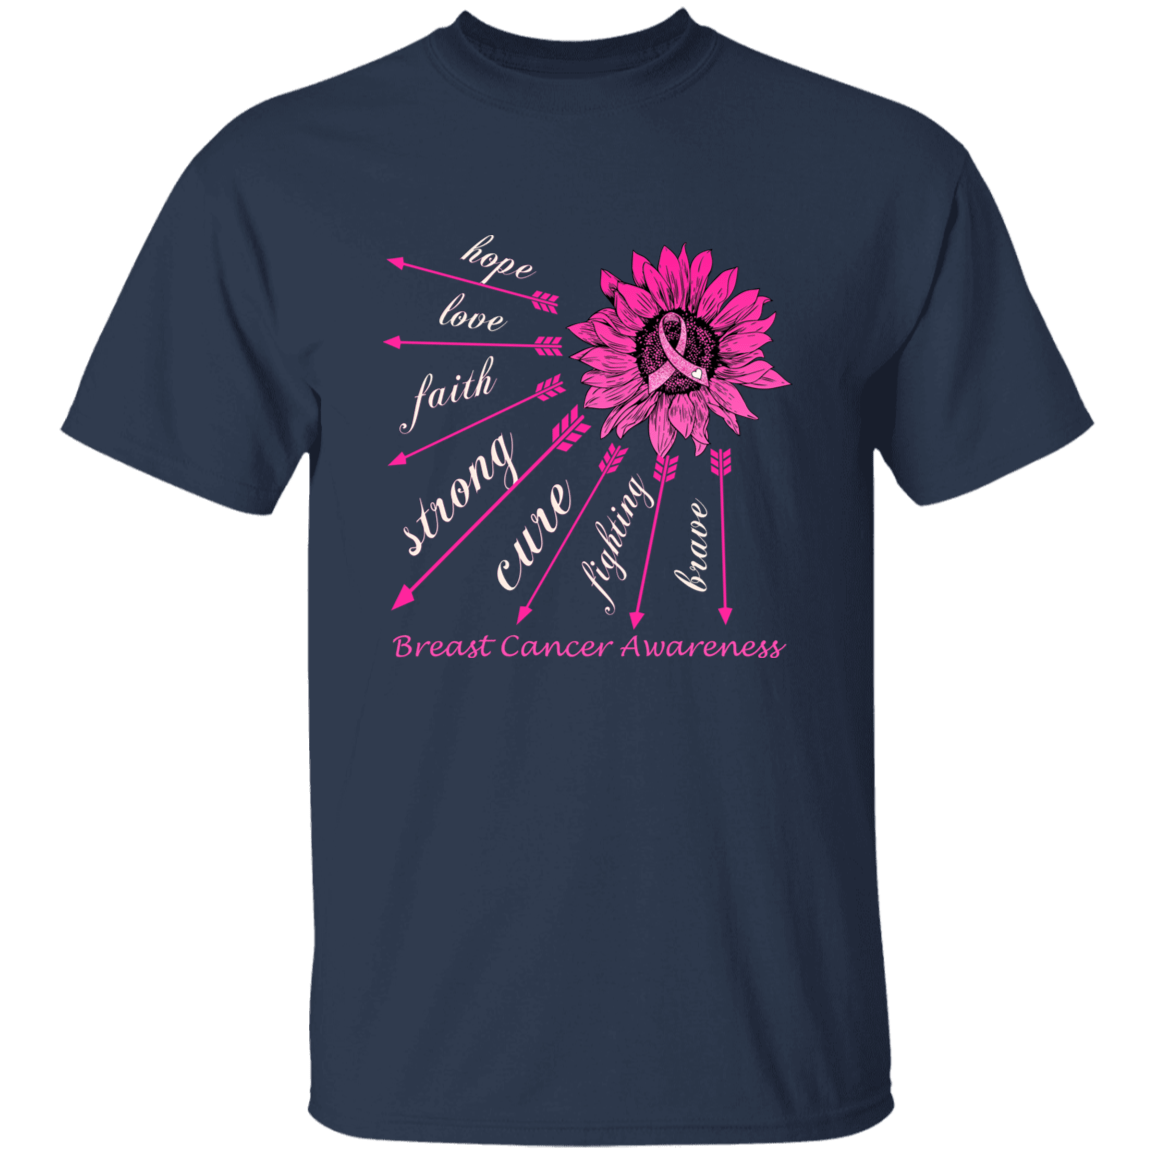 Hope, Love, Faith Breast Cancer Awareness T Shirt